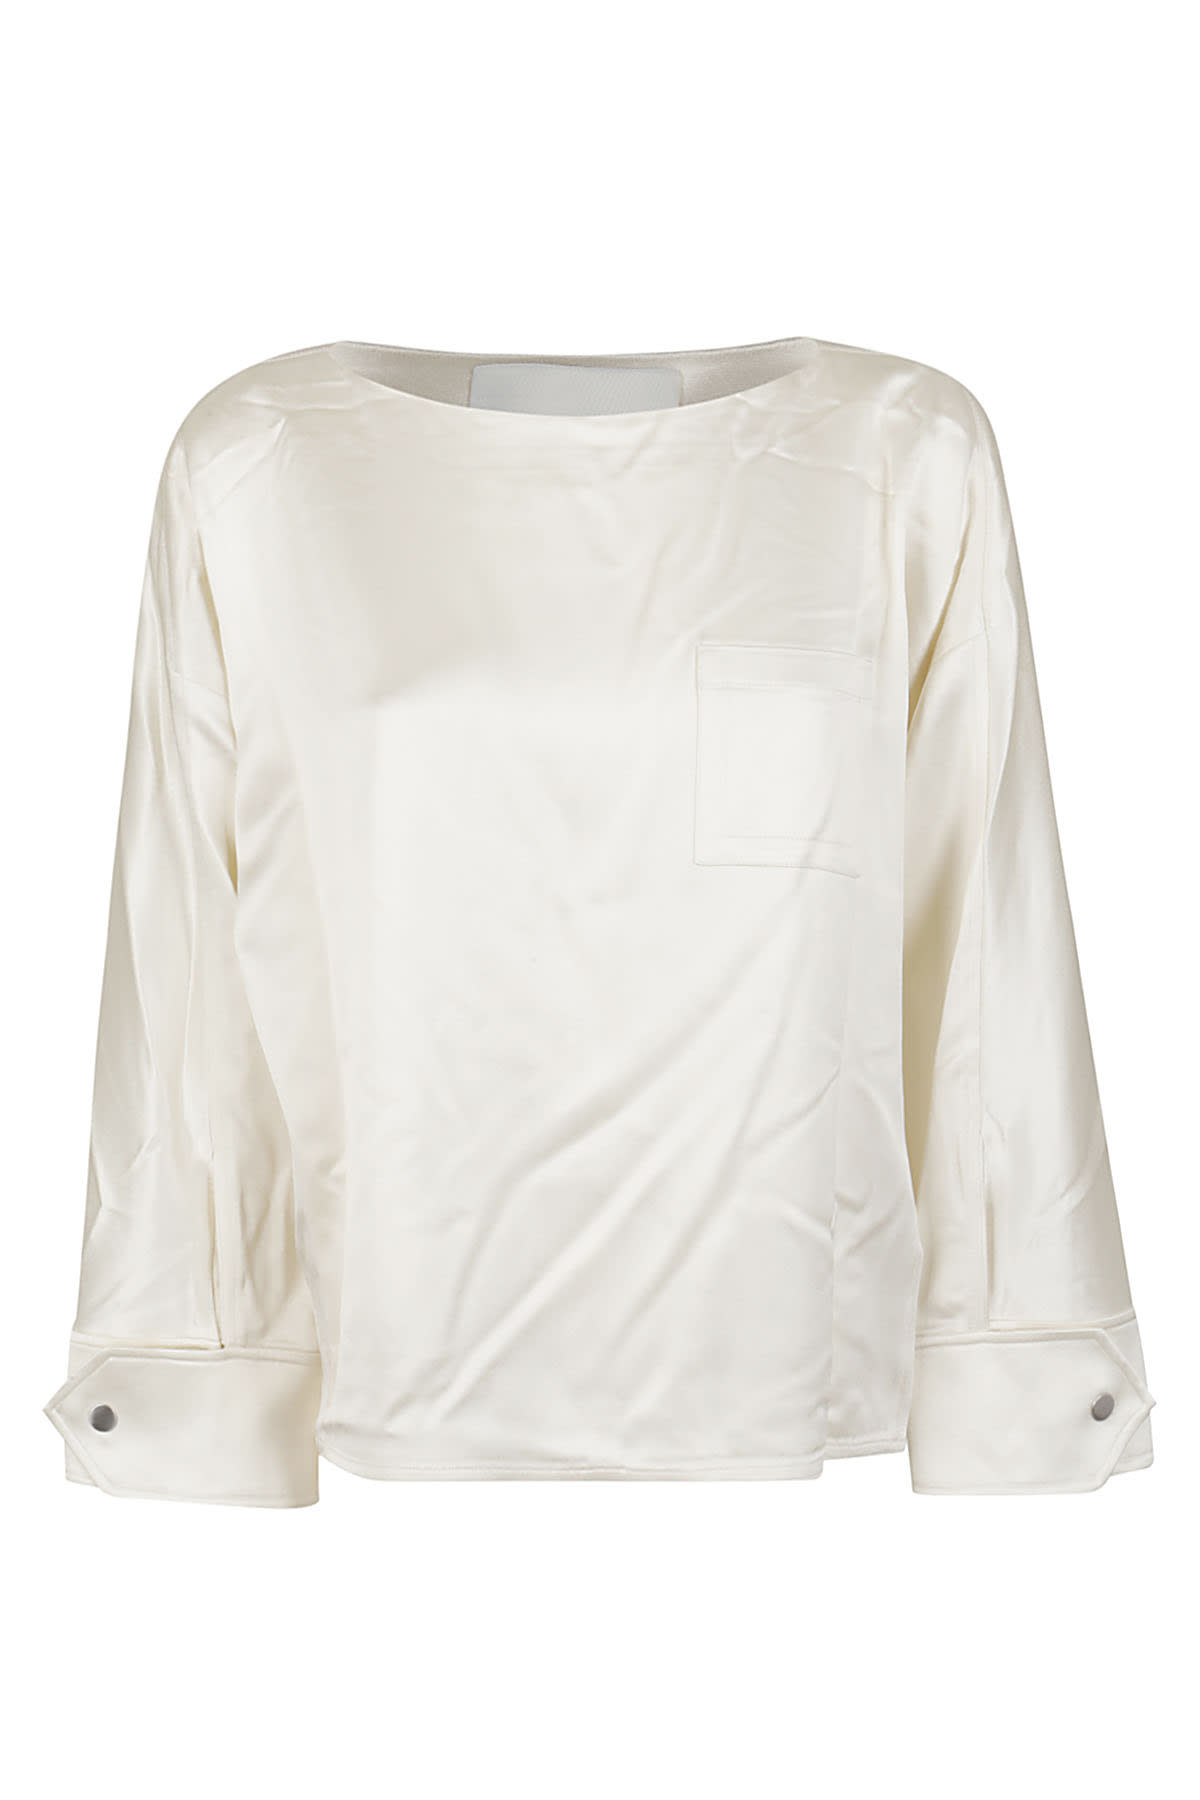 3.1 Phillip Lim / フィリップ リム Shirt In White